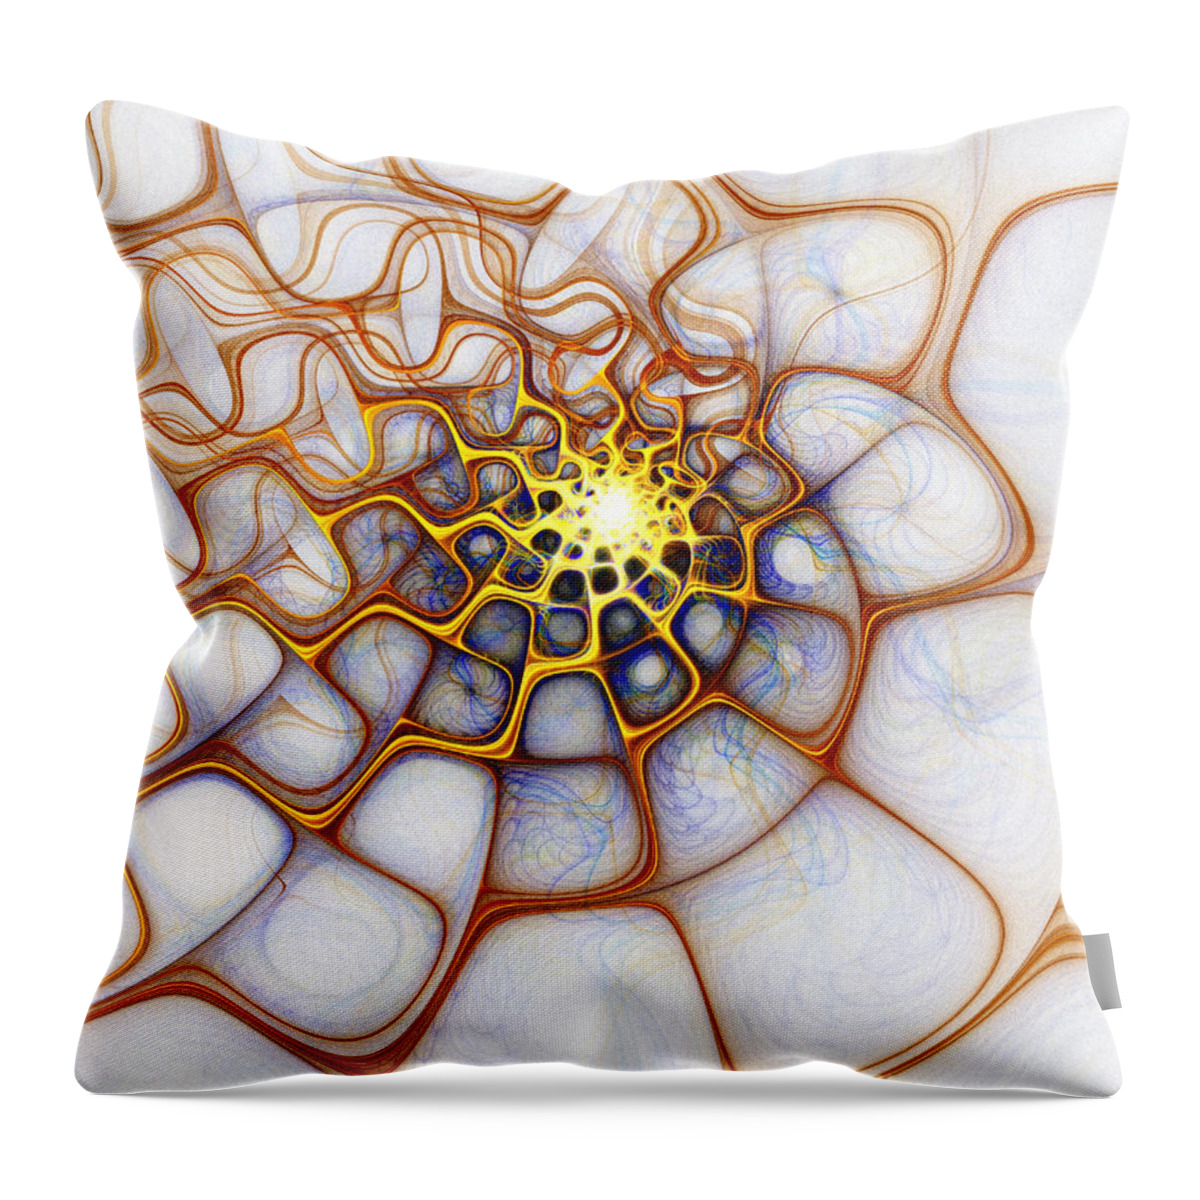 Digital Art Throw Pillow featuring the digital art Charlotte's Web by Amanda Moore